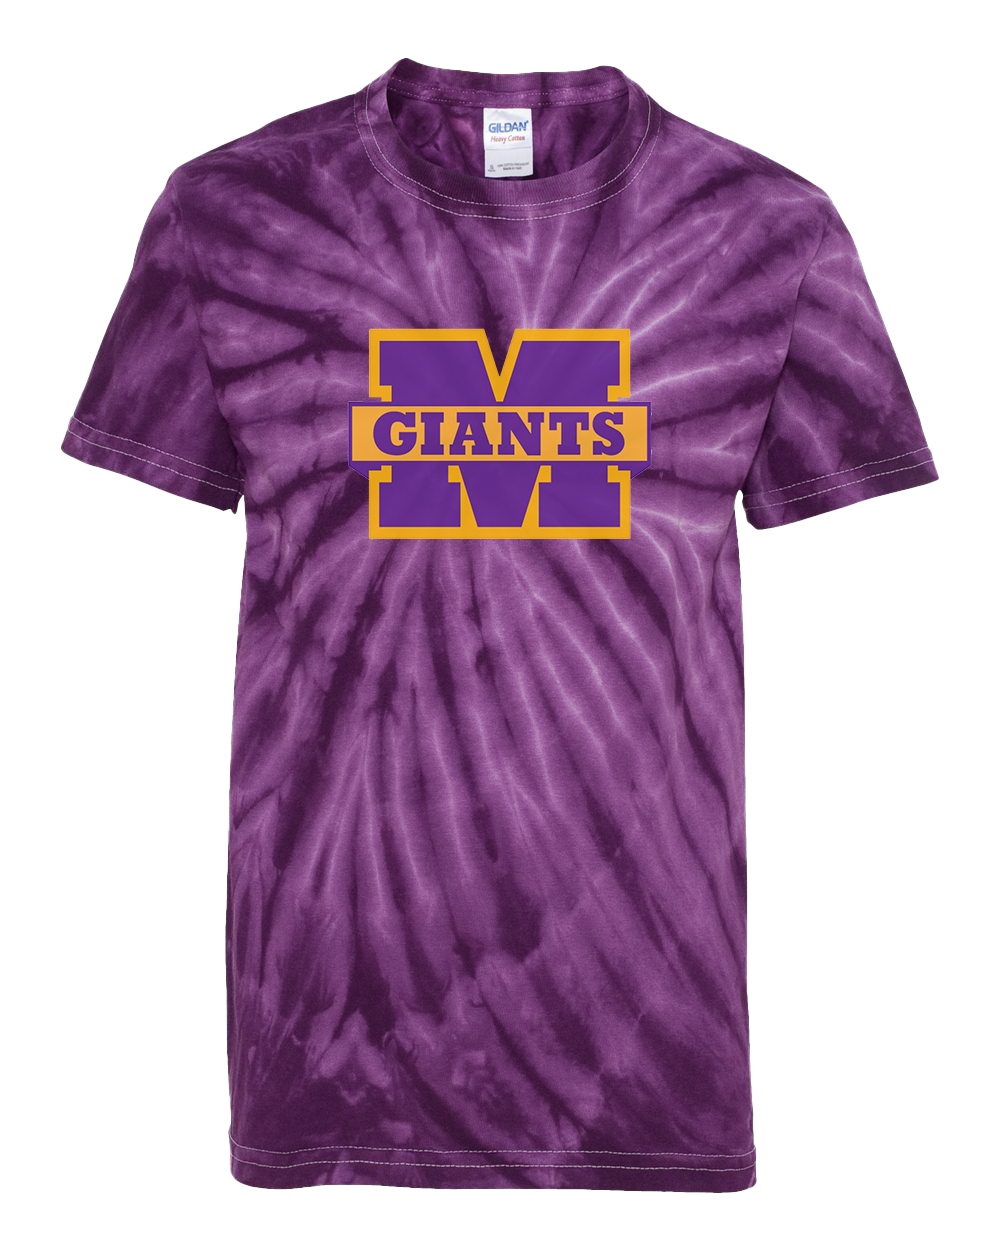 Marion Giants Youth Tie Dye Tshirt - Purple